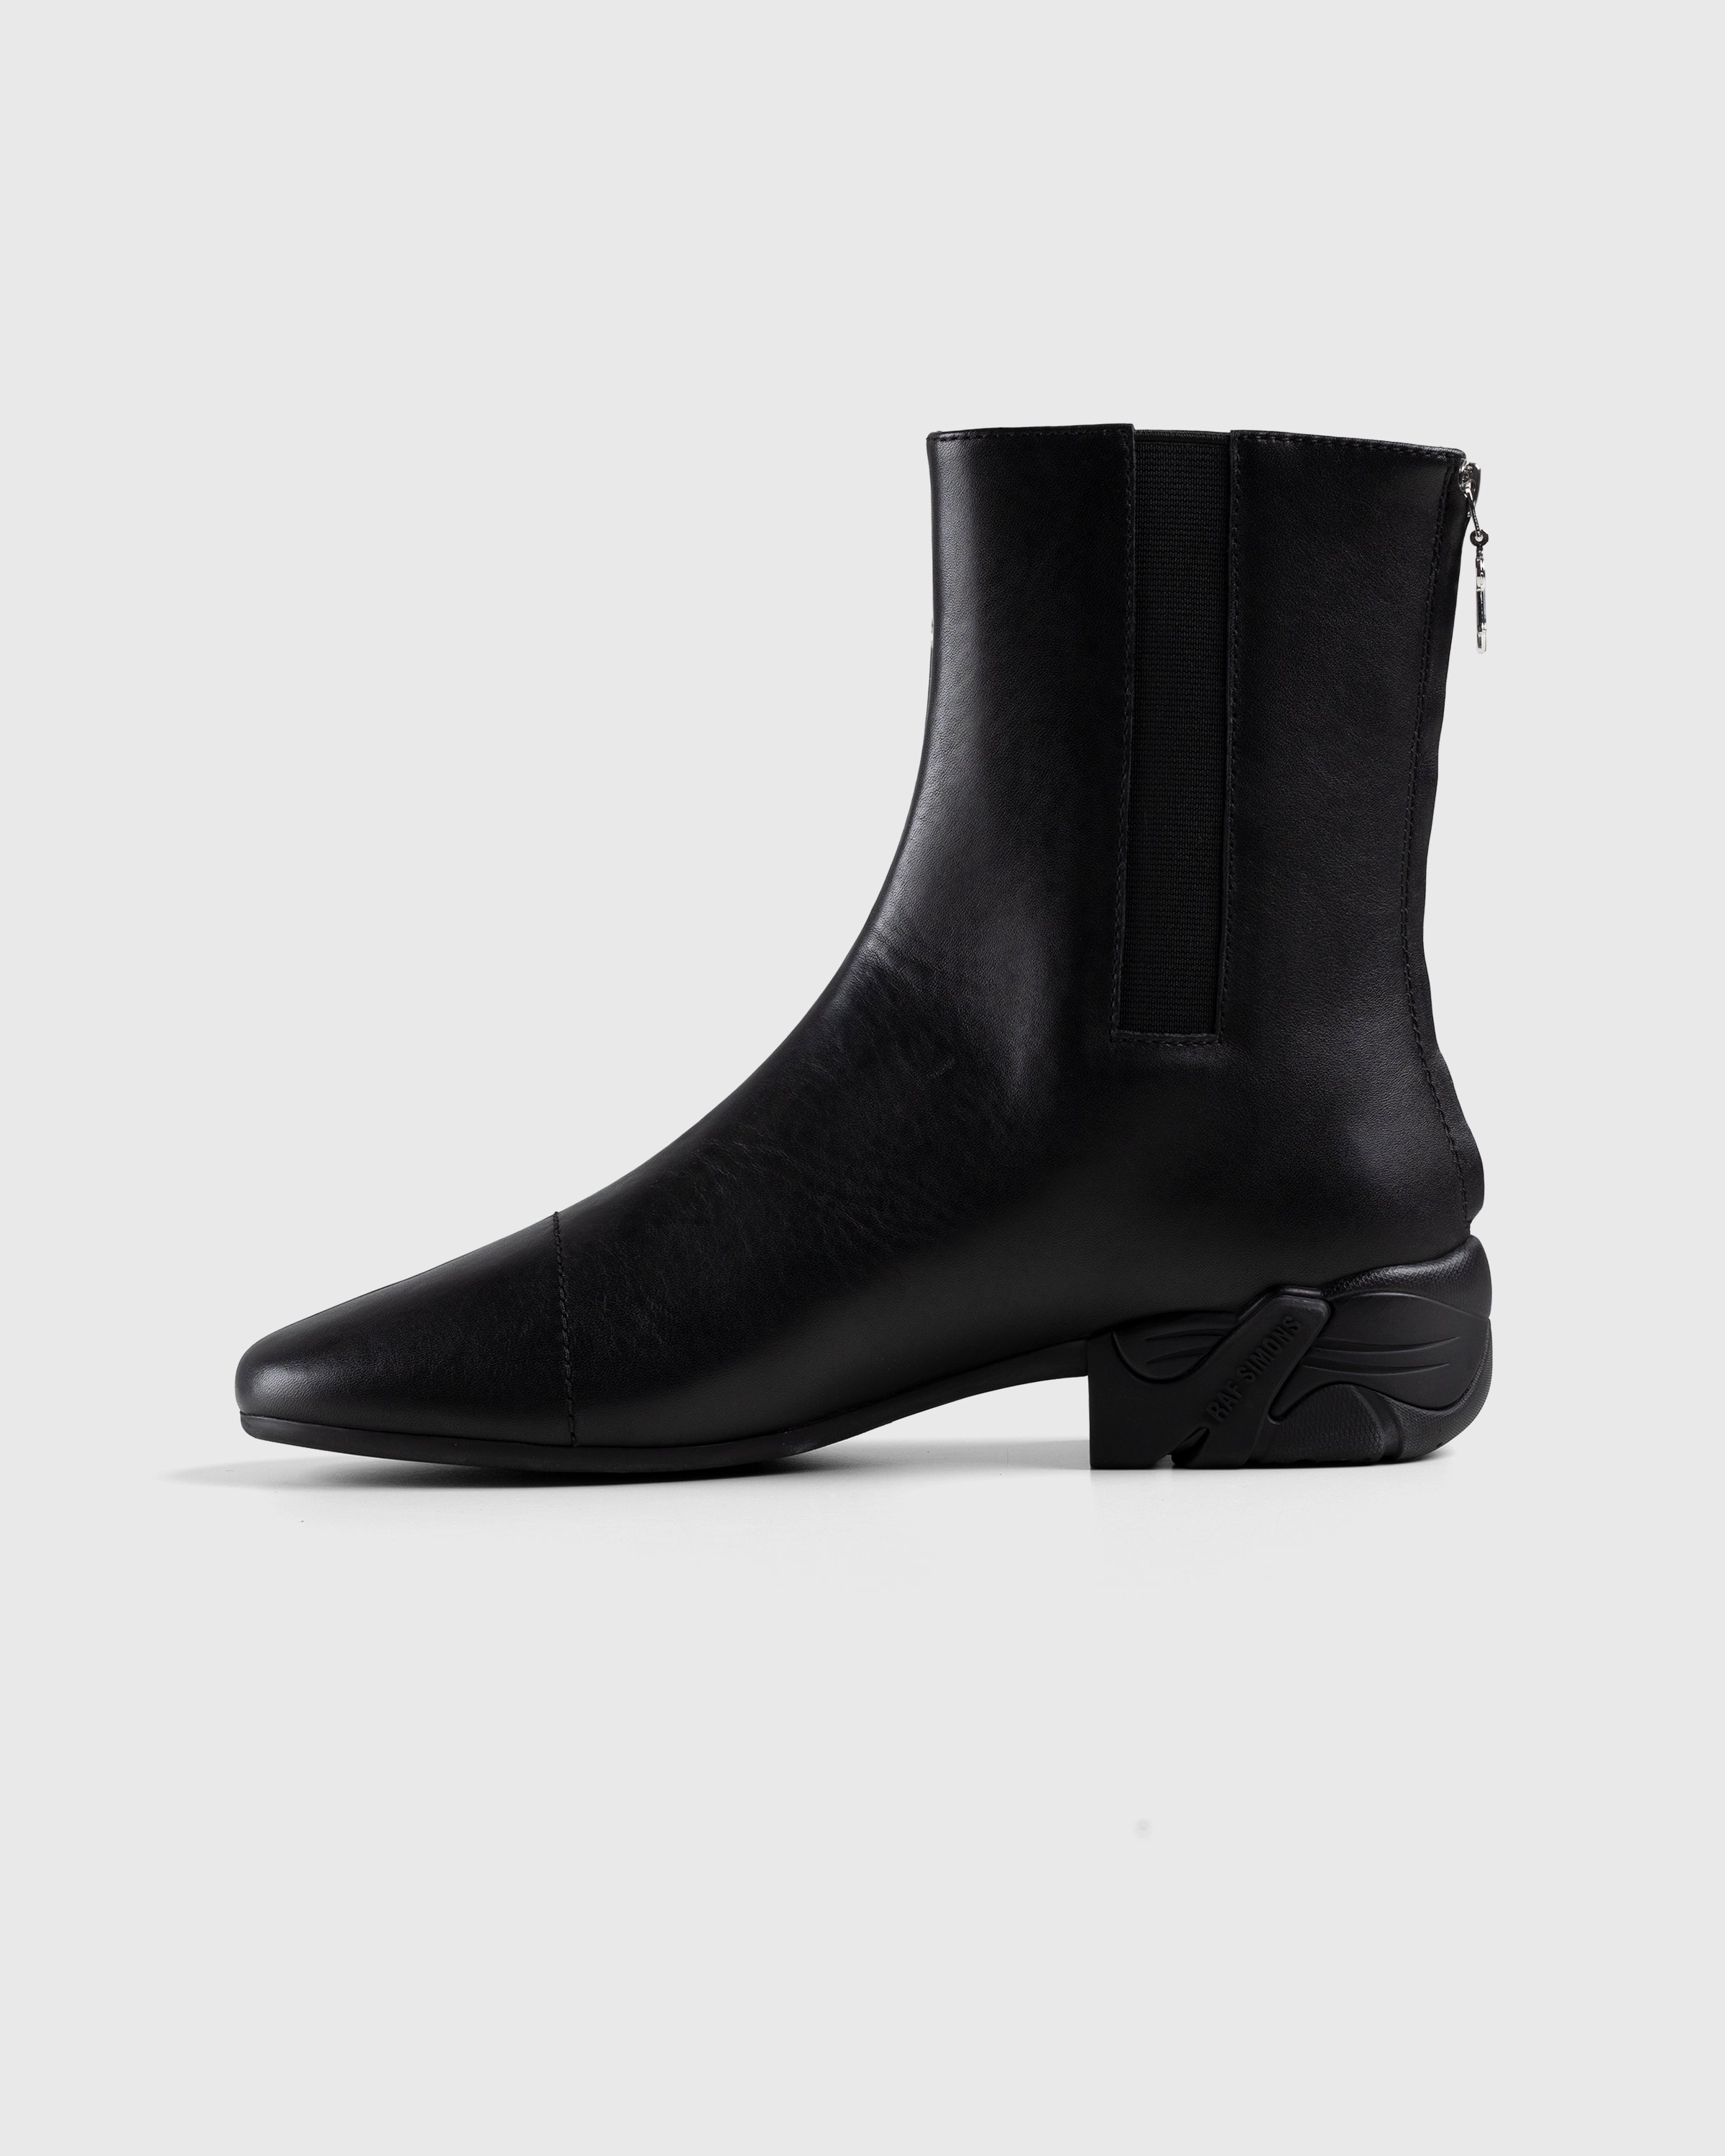 Raf Simons - Solaris High Leather Boot Black - Footwear - Black - Image 2